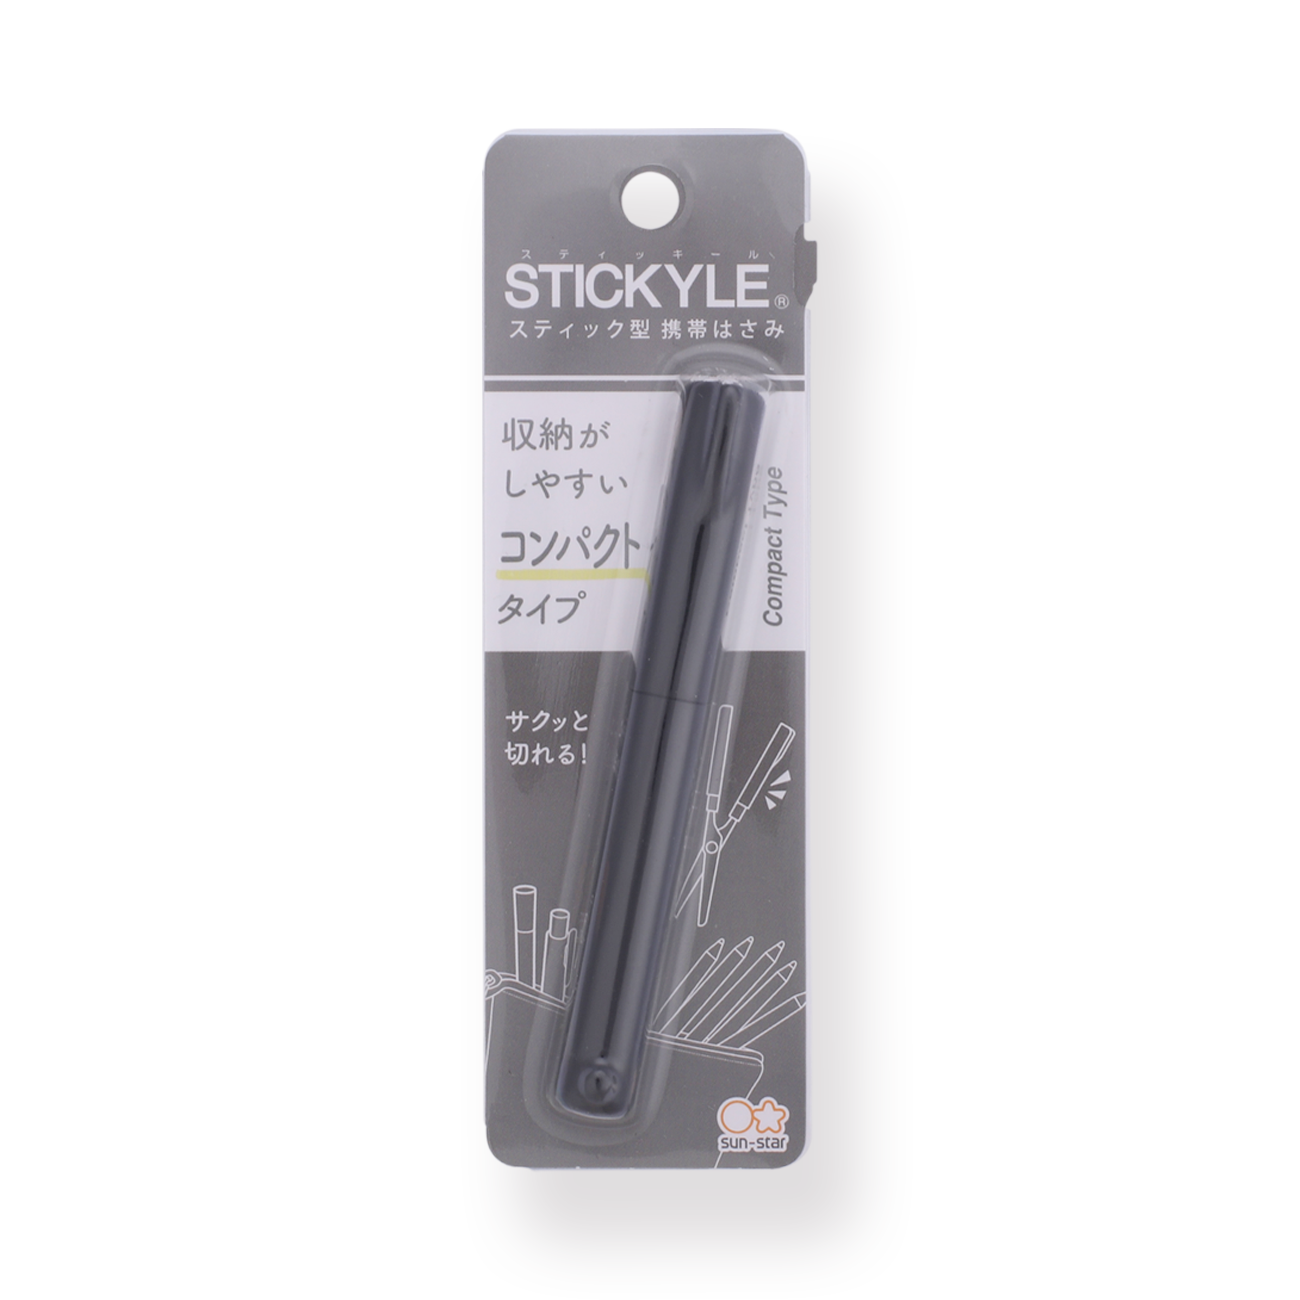 Sun-Star Stickyle Scissors - Compact Type - Black x Black - Stationery Pal